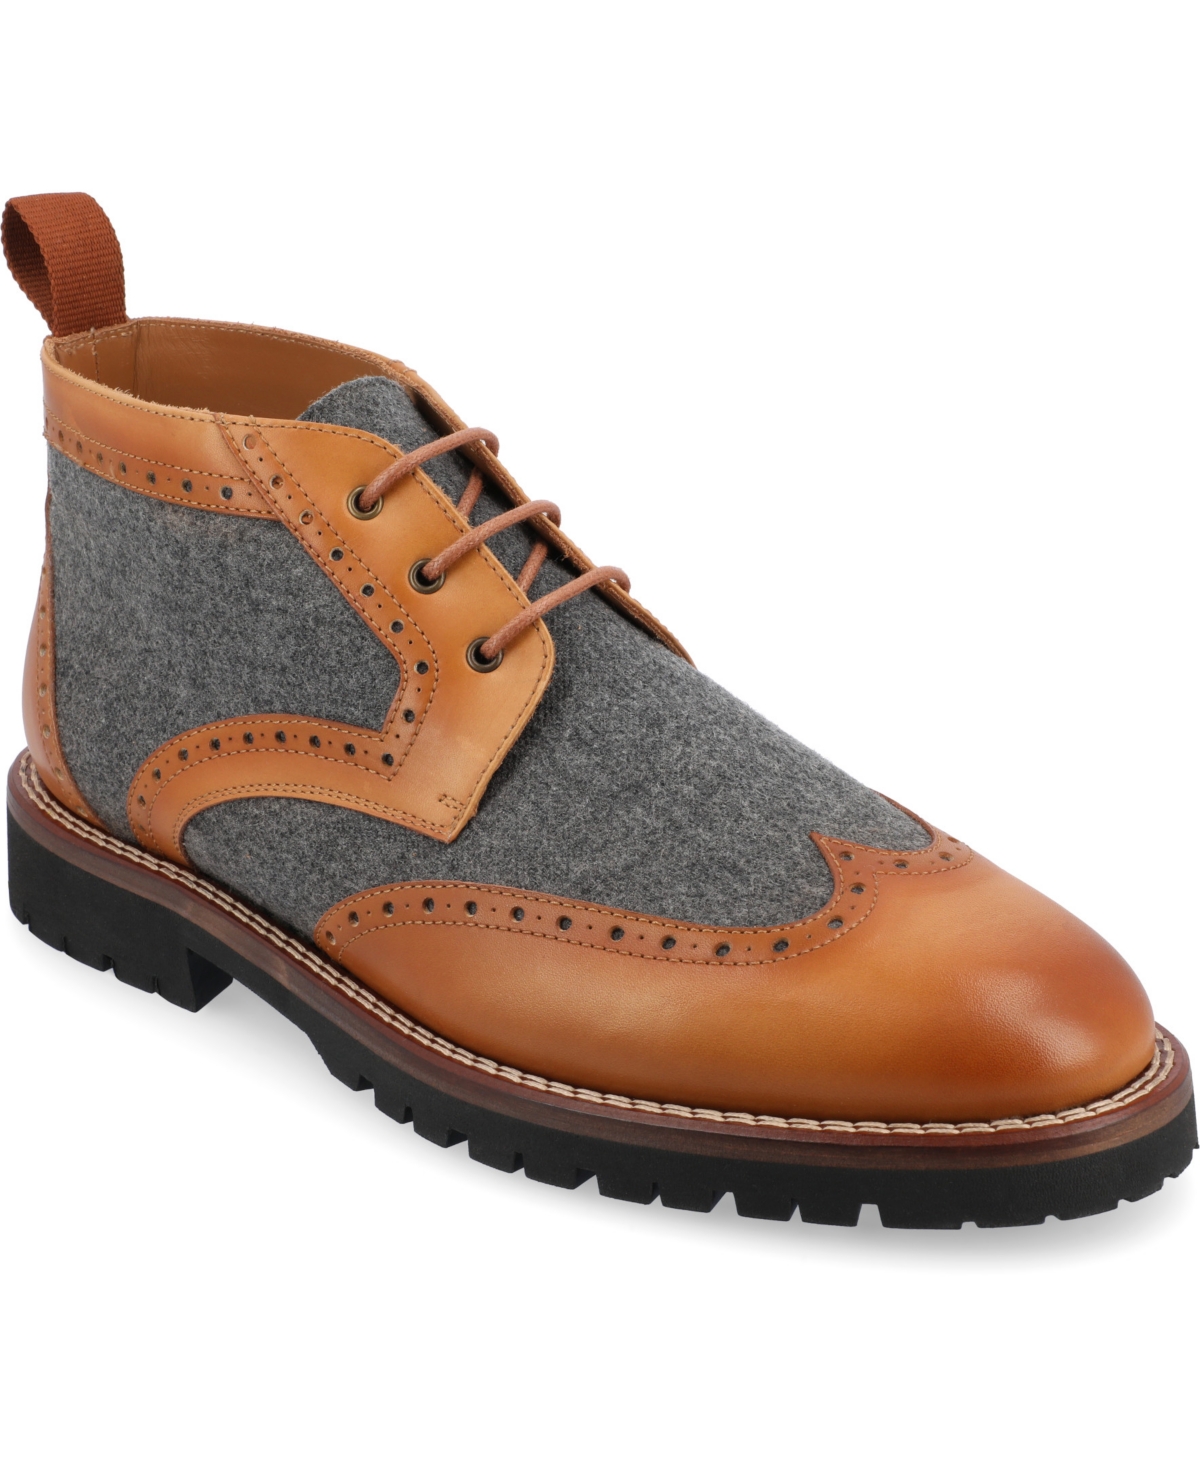 Men's The Livingston Chukka Boot - Grey/Brown